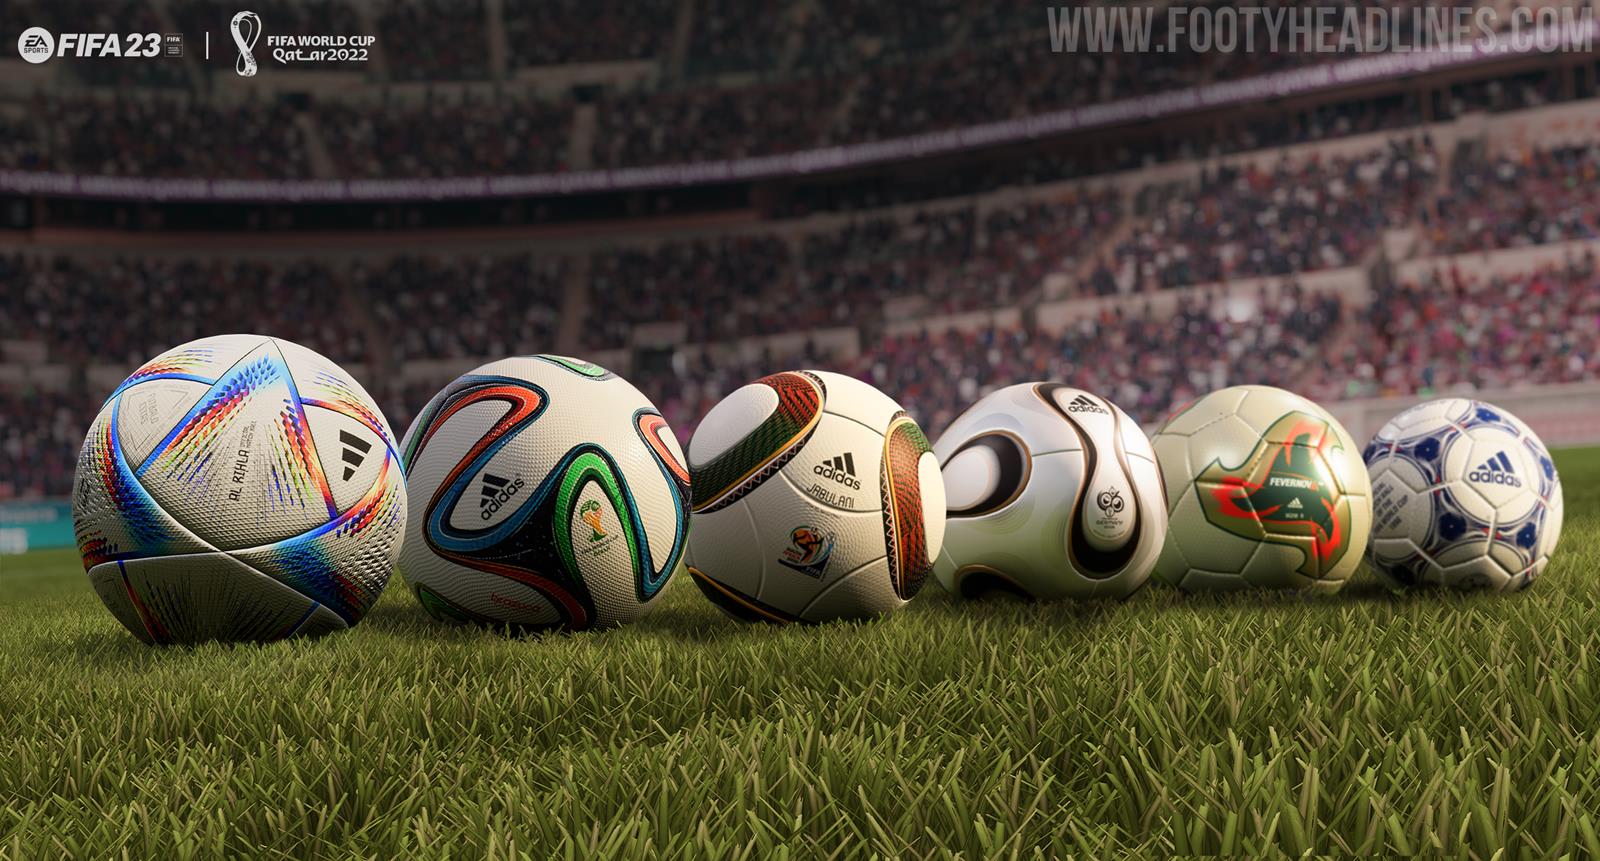 FIFA 23 Brings Back 1998-2014 World Cup Balls - No 2018 World Cup Ball Footy Headlines